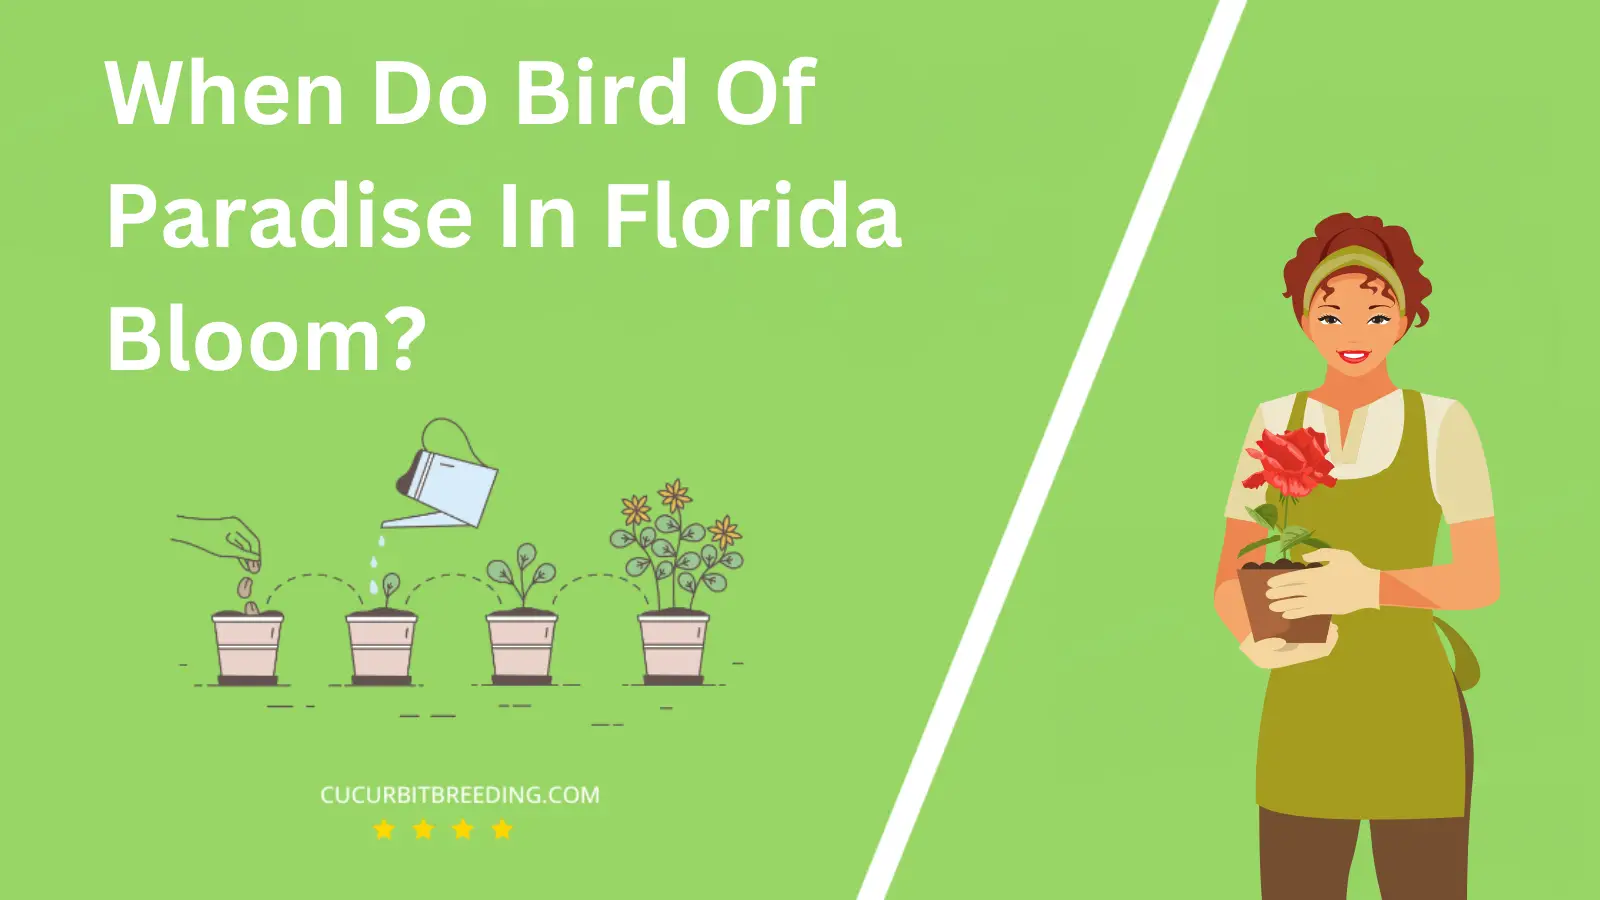 When Do Bird Of Paradise In Florida Bloom?